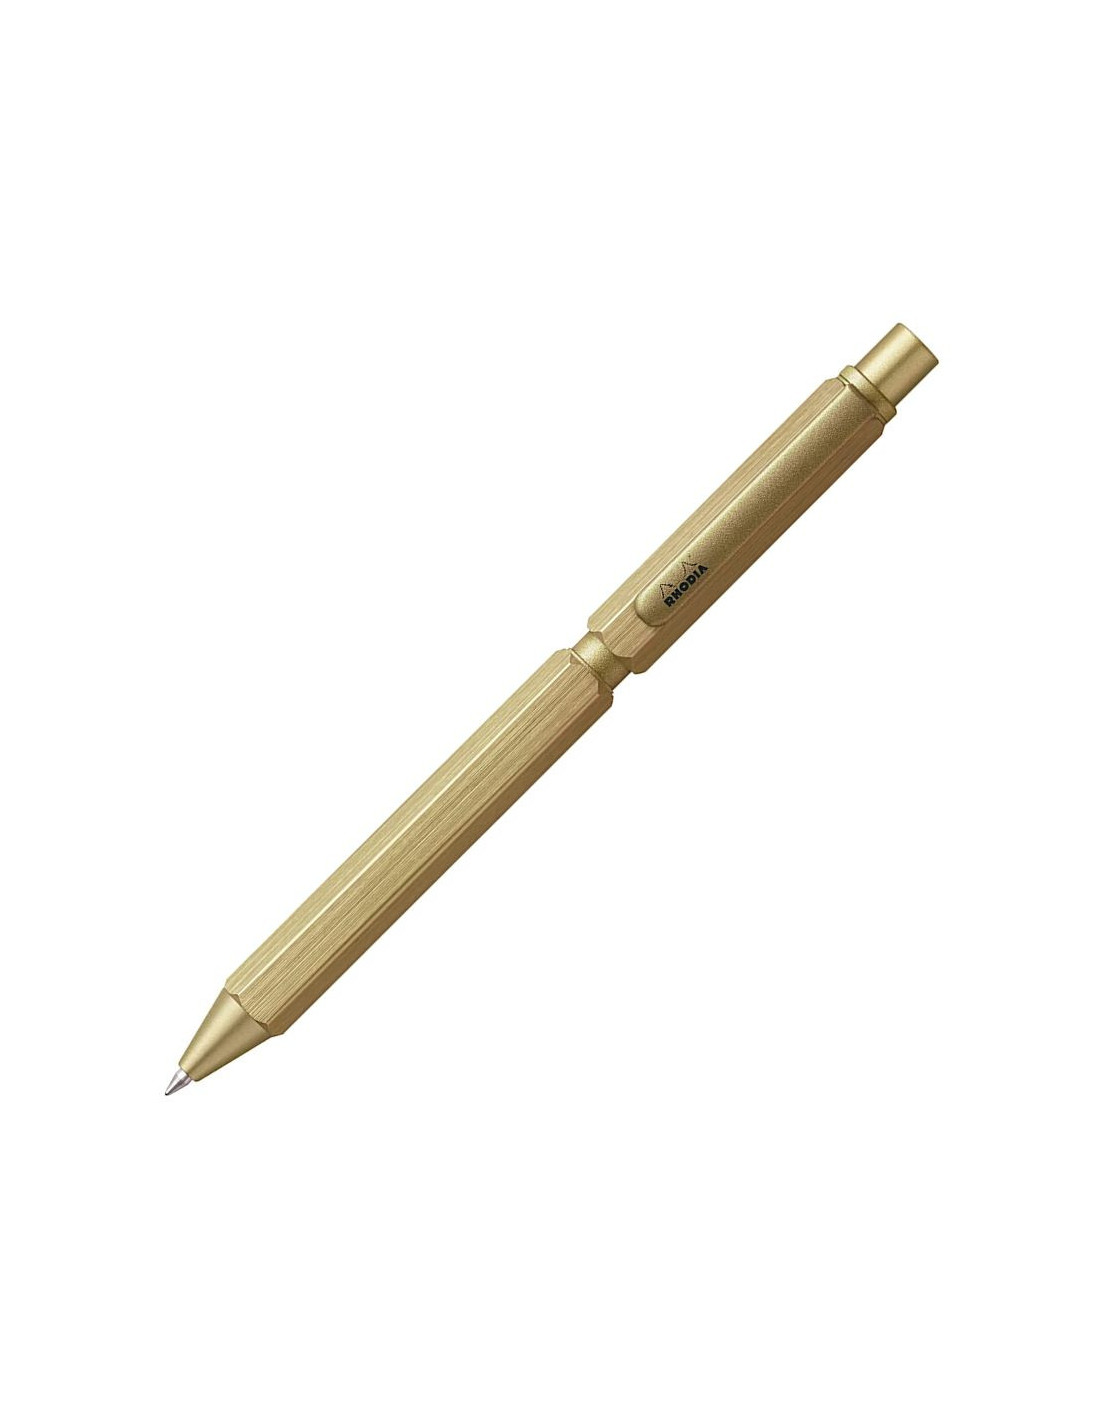 Rhodia scRipt Multipen 3in1 - 2 colors ballpoint pen and 0.5mm mechanical pencil - Gold